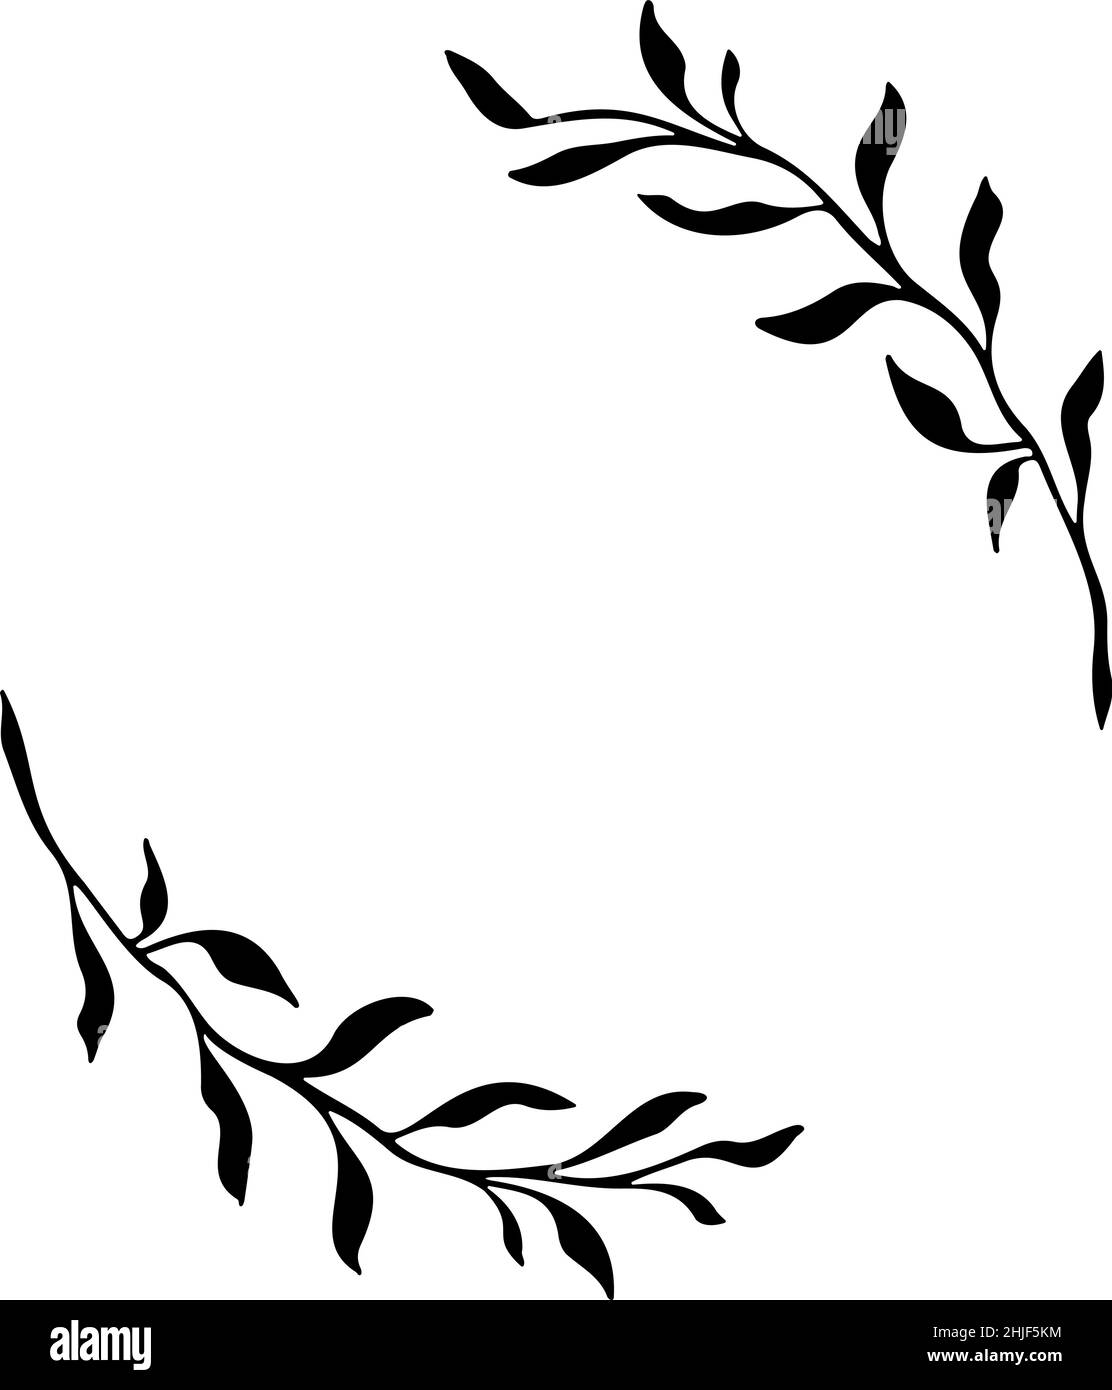 Leaves branch vector. Floral frame. Hand drawn border. . Vector illustration Stock Vector